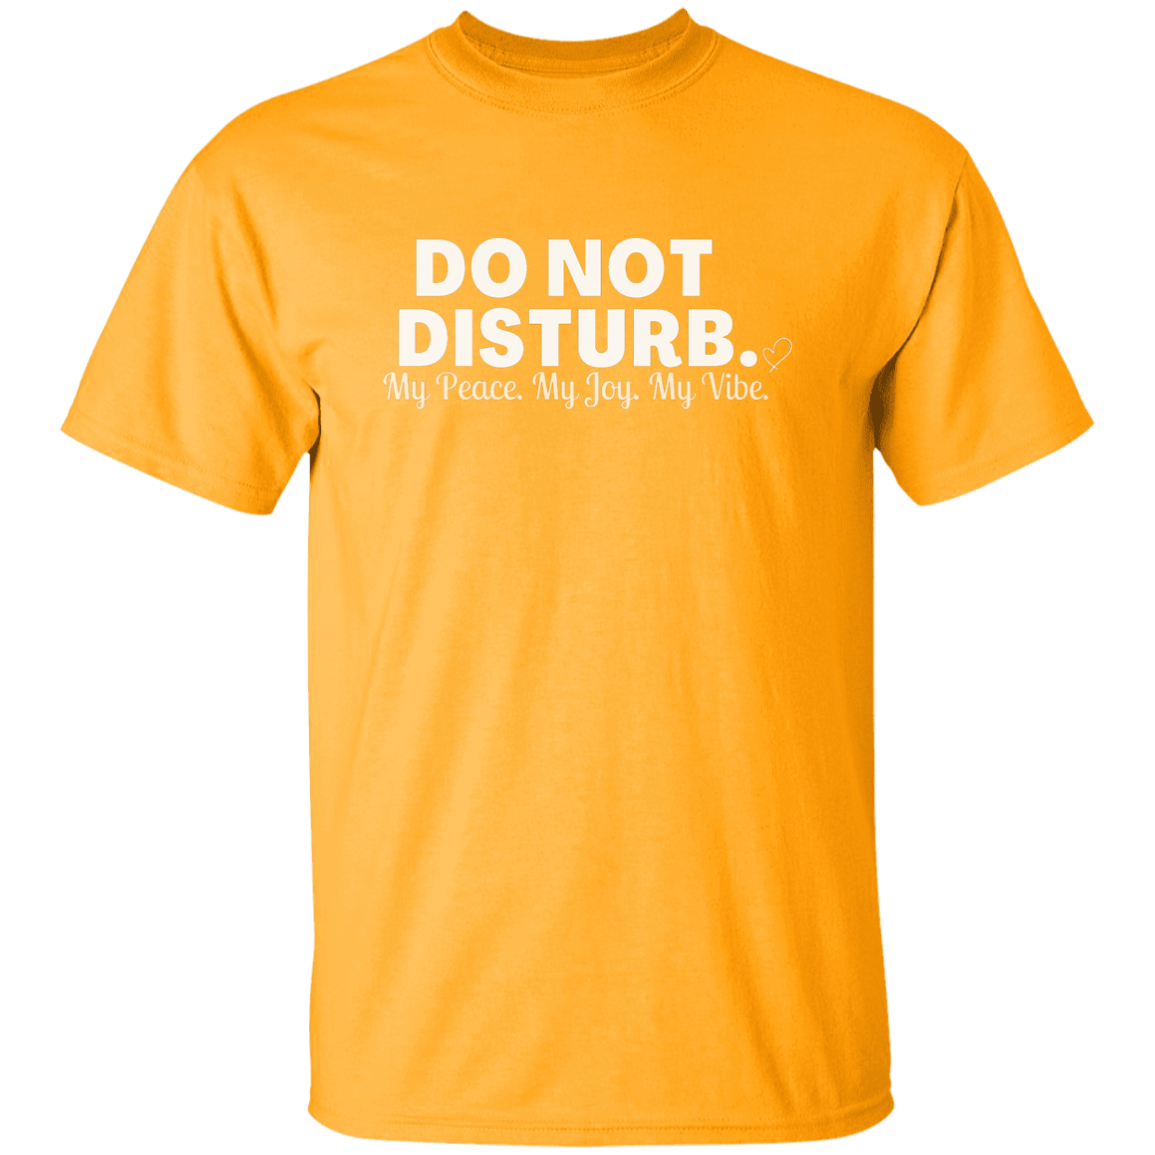 Do Not Disturb - My Peace Joy Vibe (WHT)